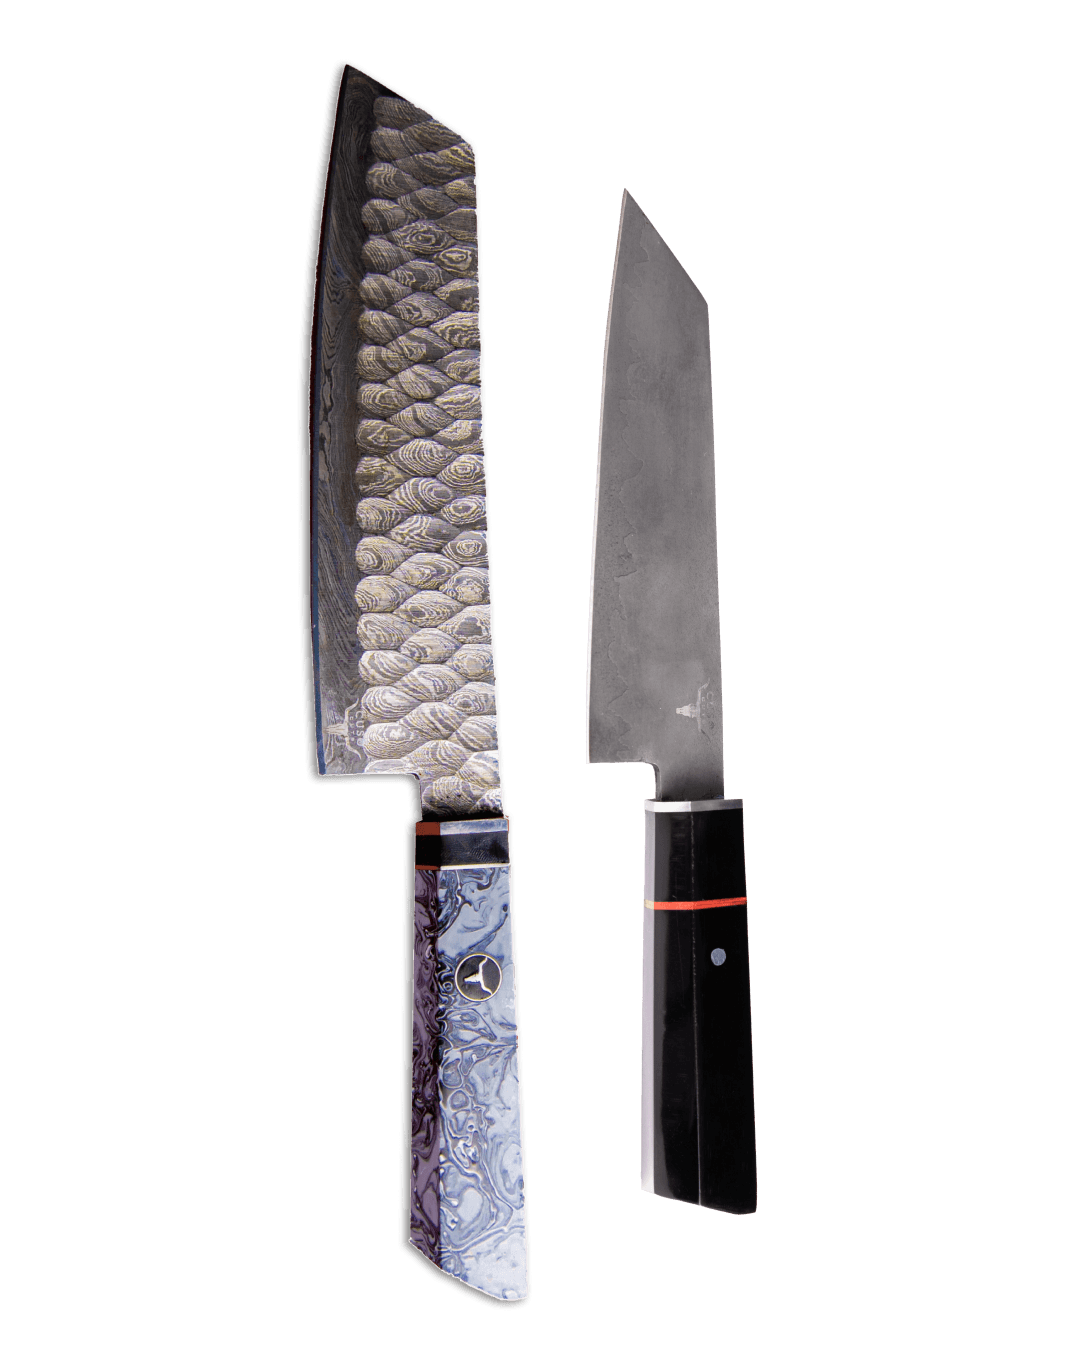 
                  
                    Cuso Cuts Chef Knife Duo
                  
                